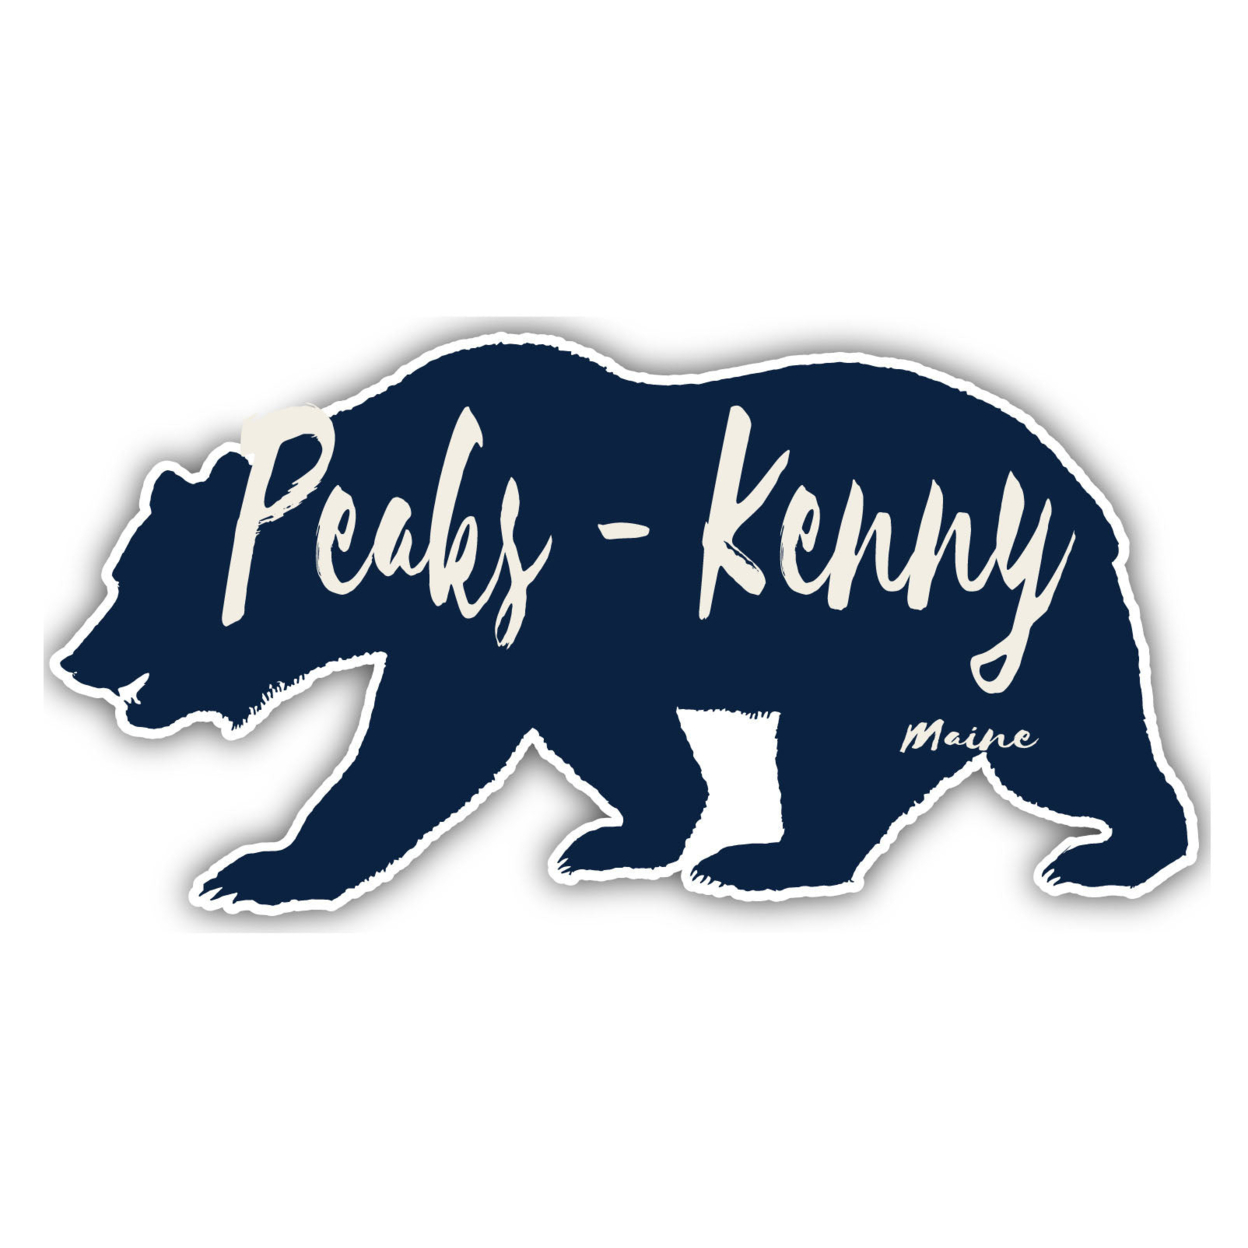 Peaks - Kenny Maine Souvenir Decorative Stickers (Choose Theme And Size) - Single Unit, 4-Inch, Bear